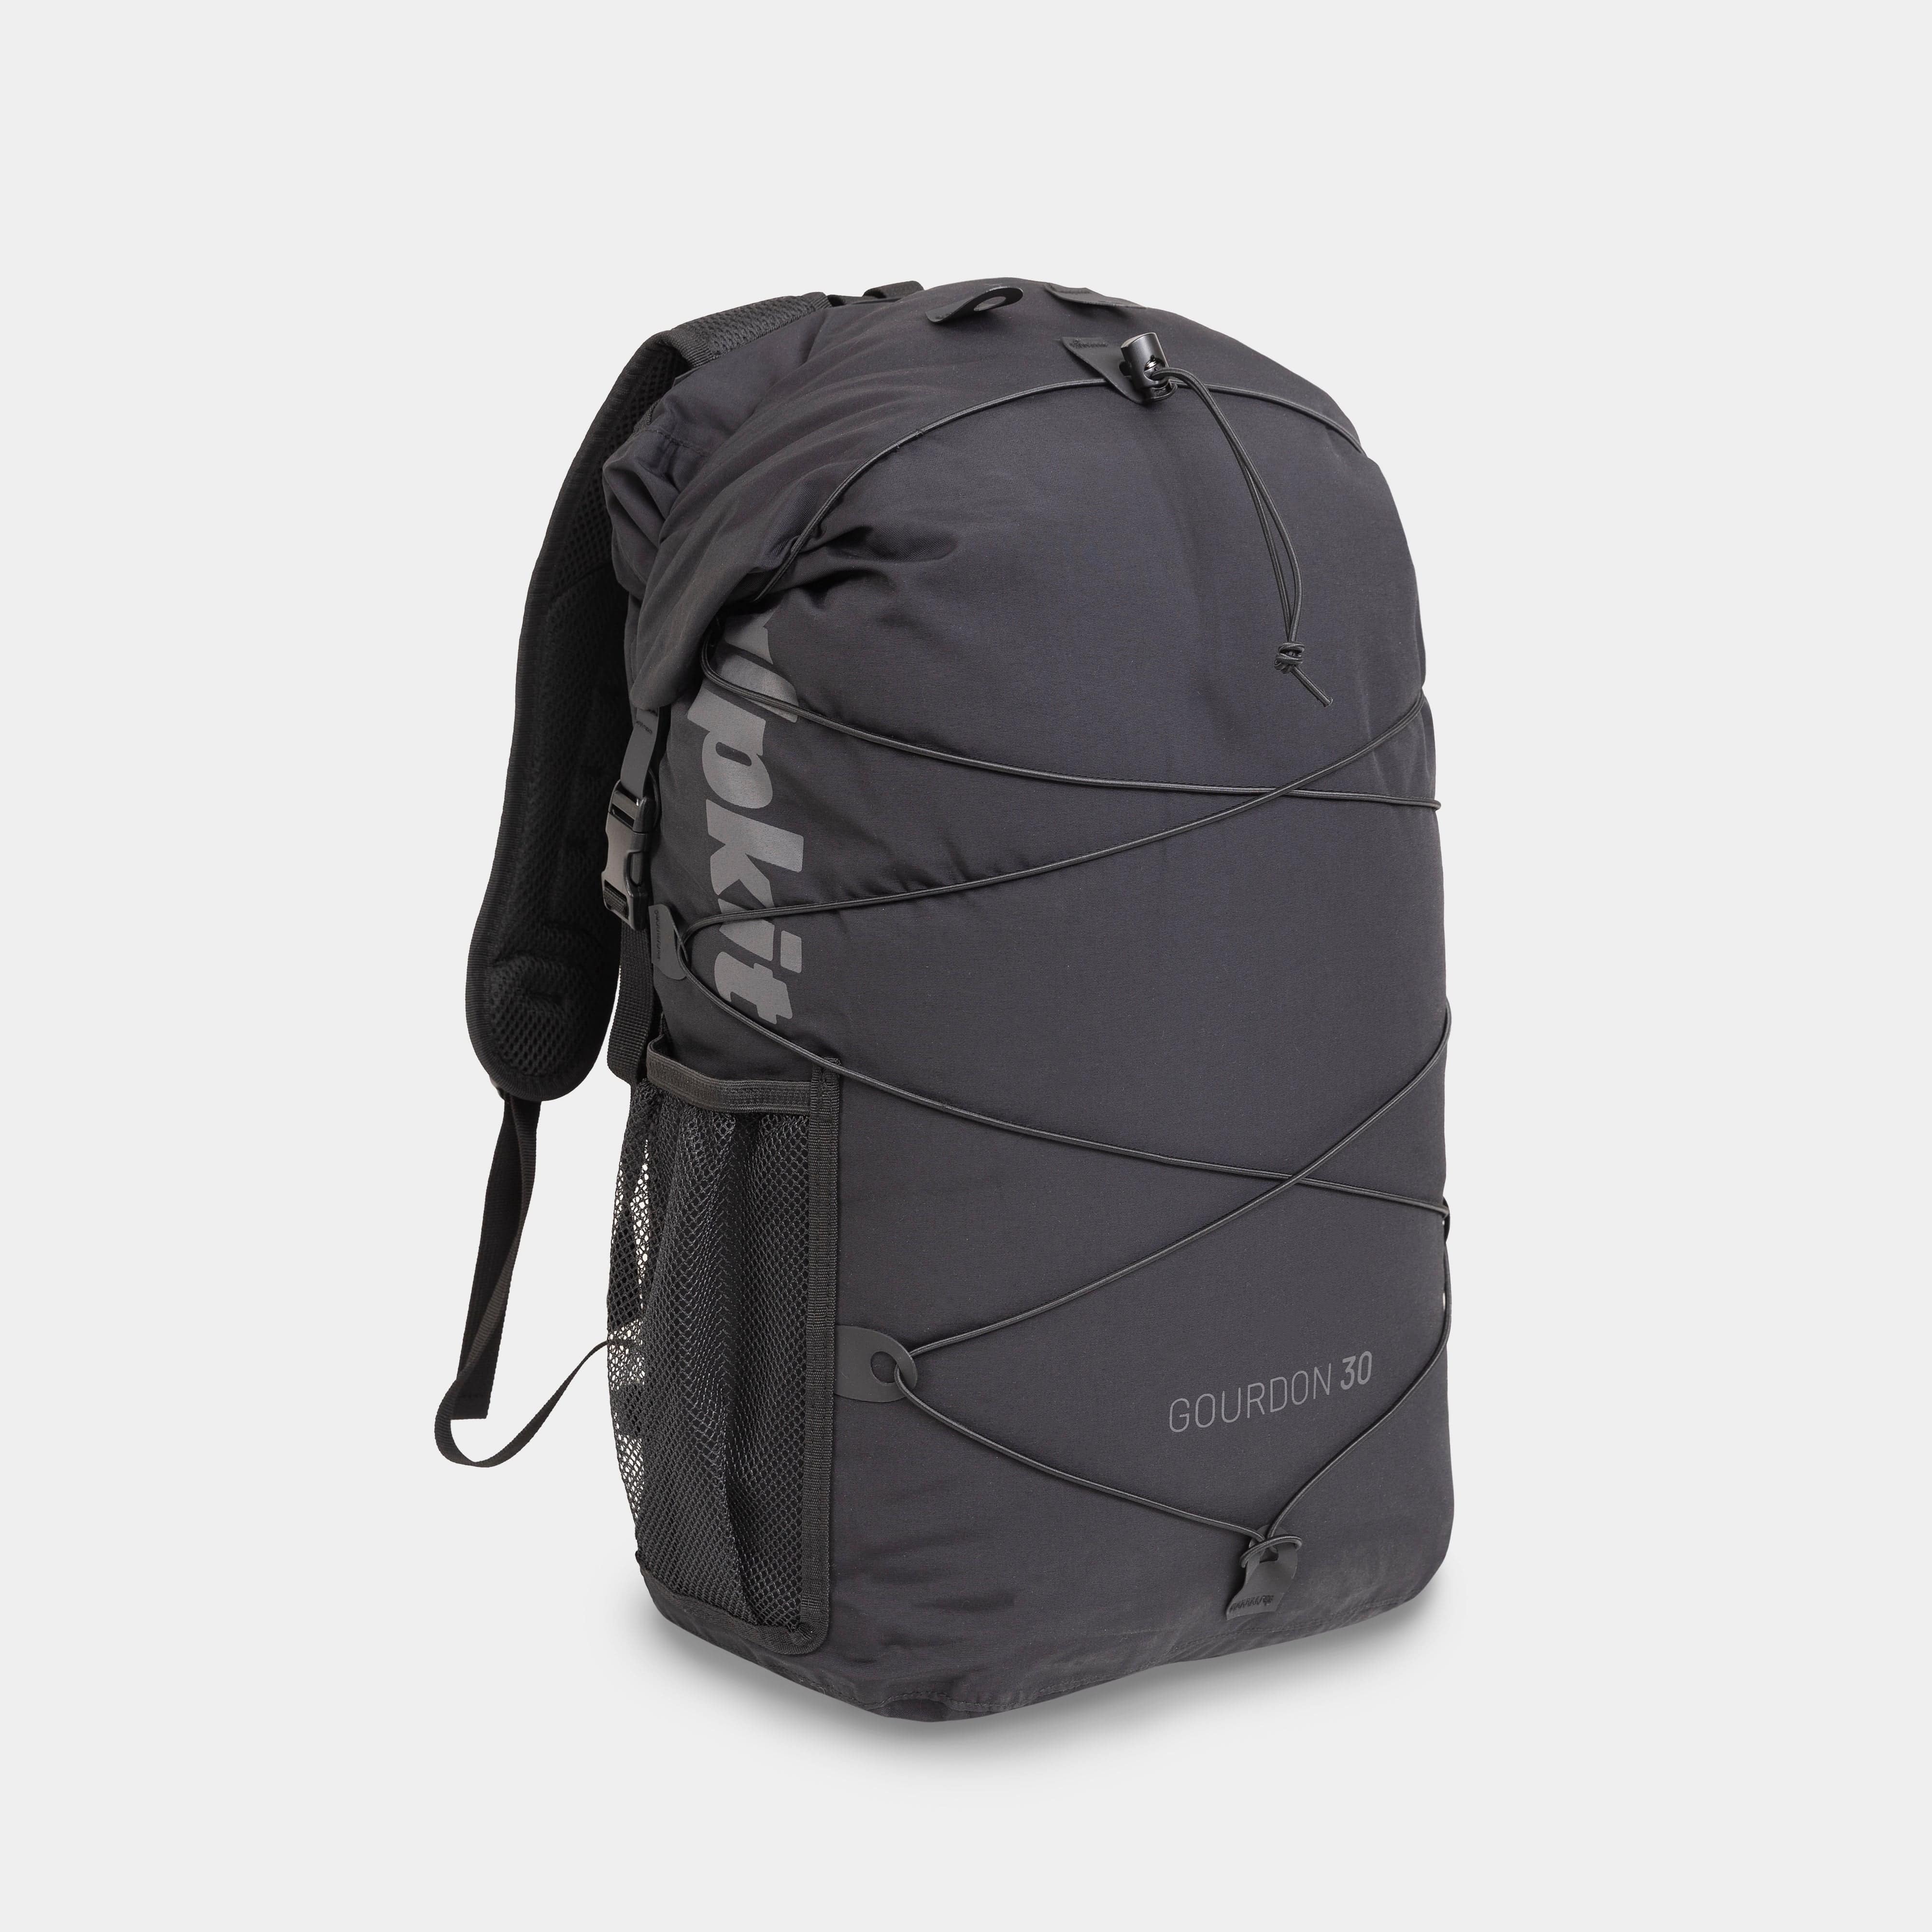 alpkit Gourdon 30 dry bag backpack in black